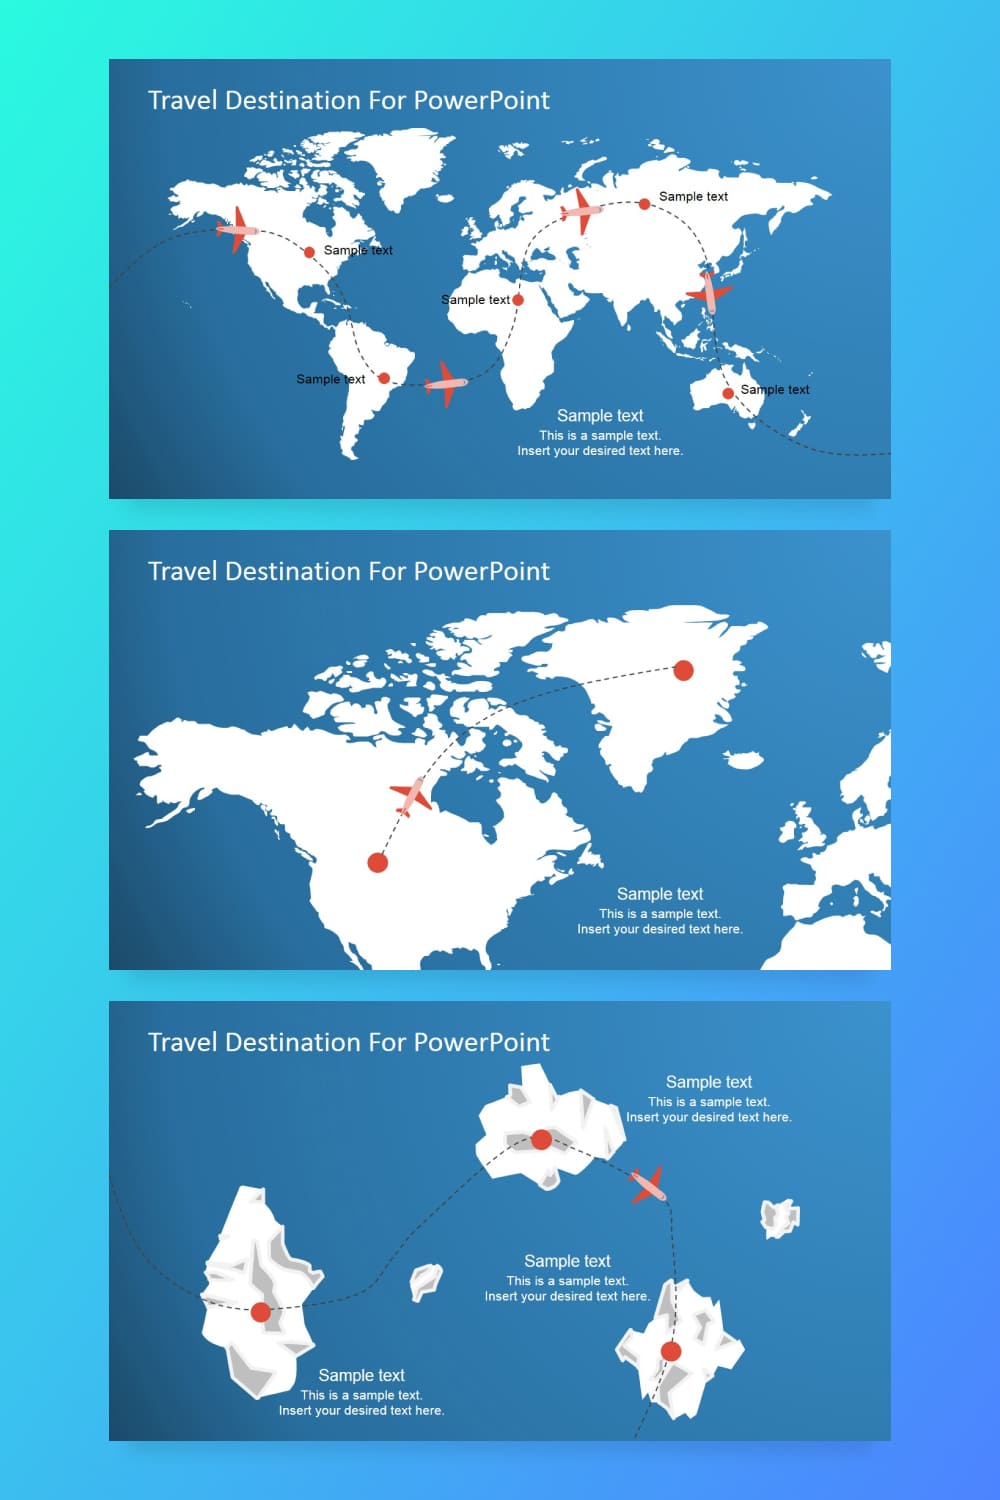 Travel destination PowerPoint templates.